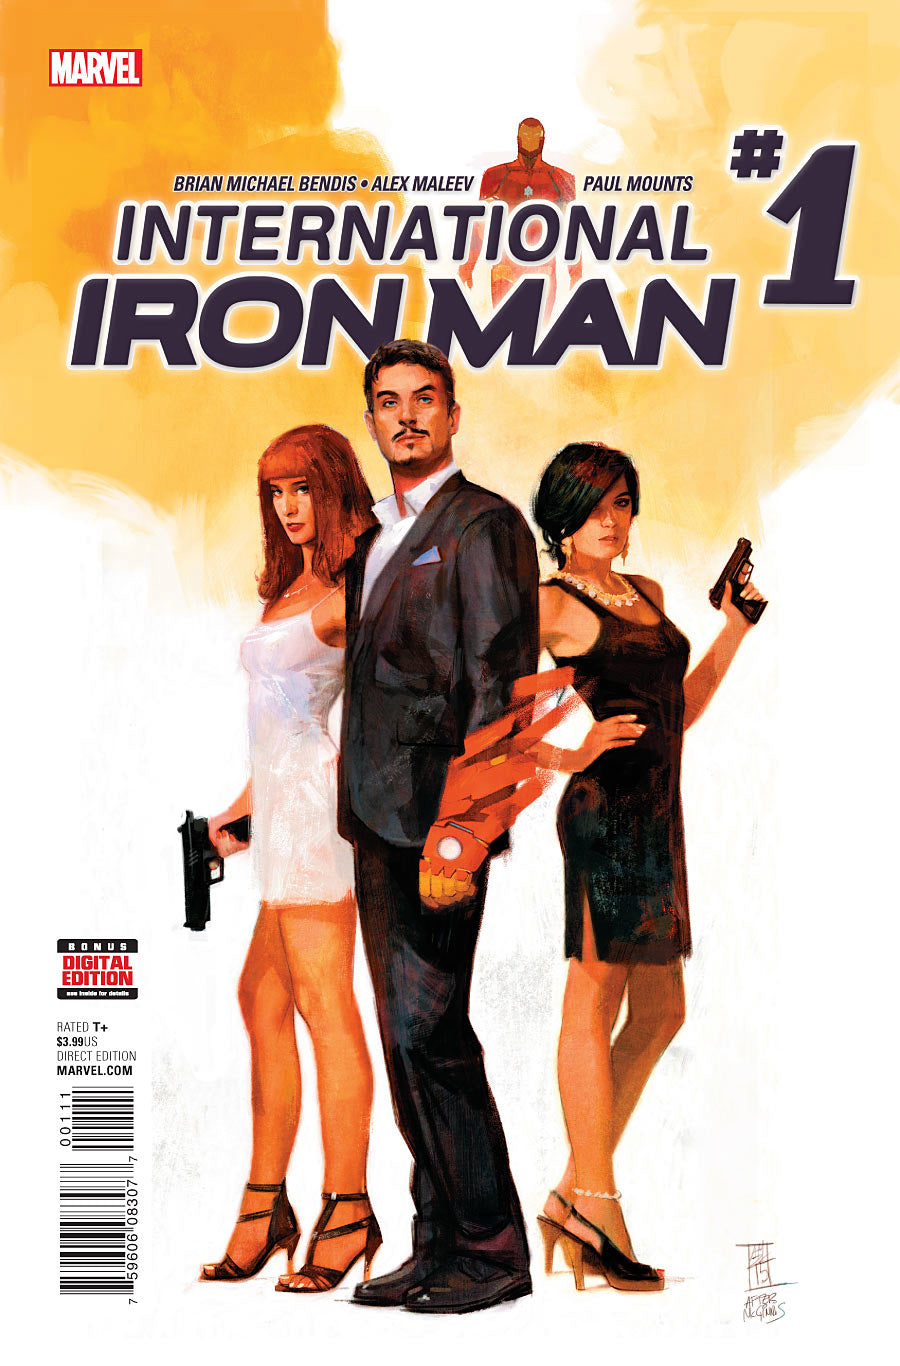 INTERNATIONAL IRON MAN #1 COMIC